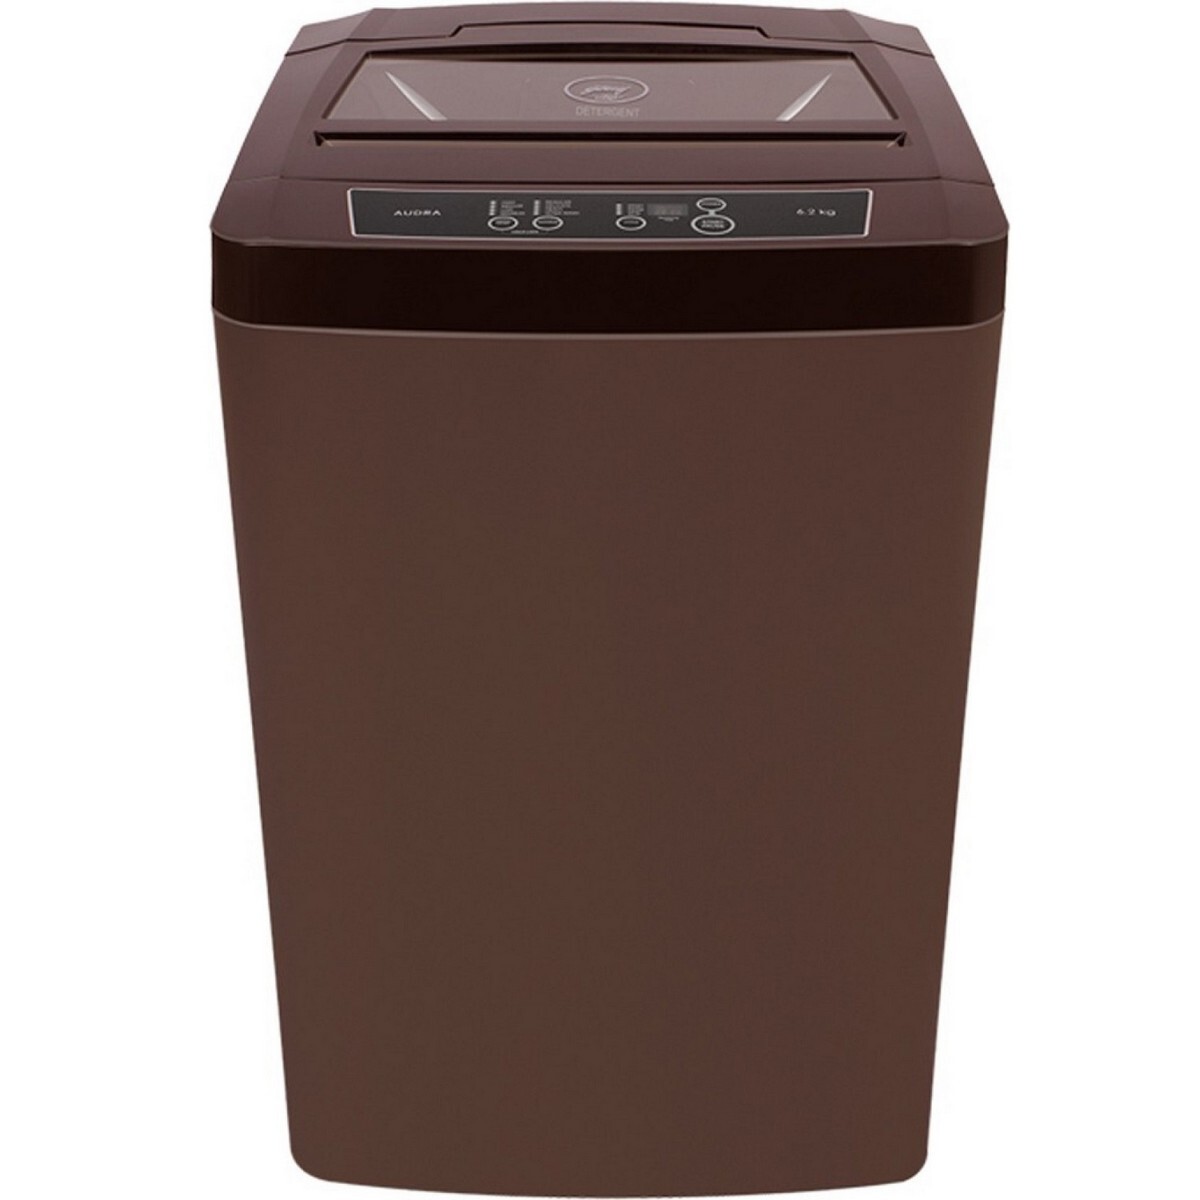 Godrej Washing Machine Top Load WT EONAudra 620 Cocoa Brown